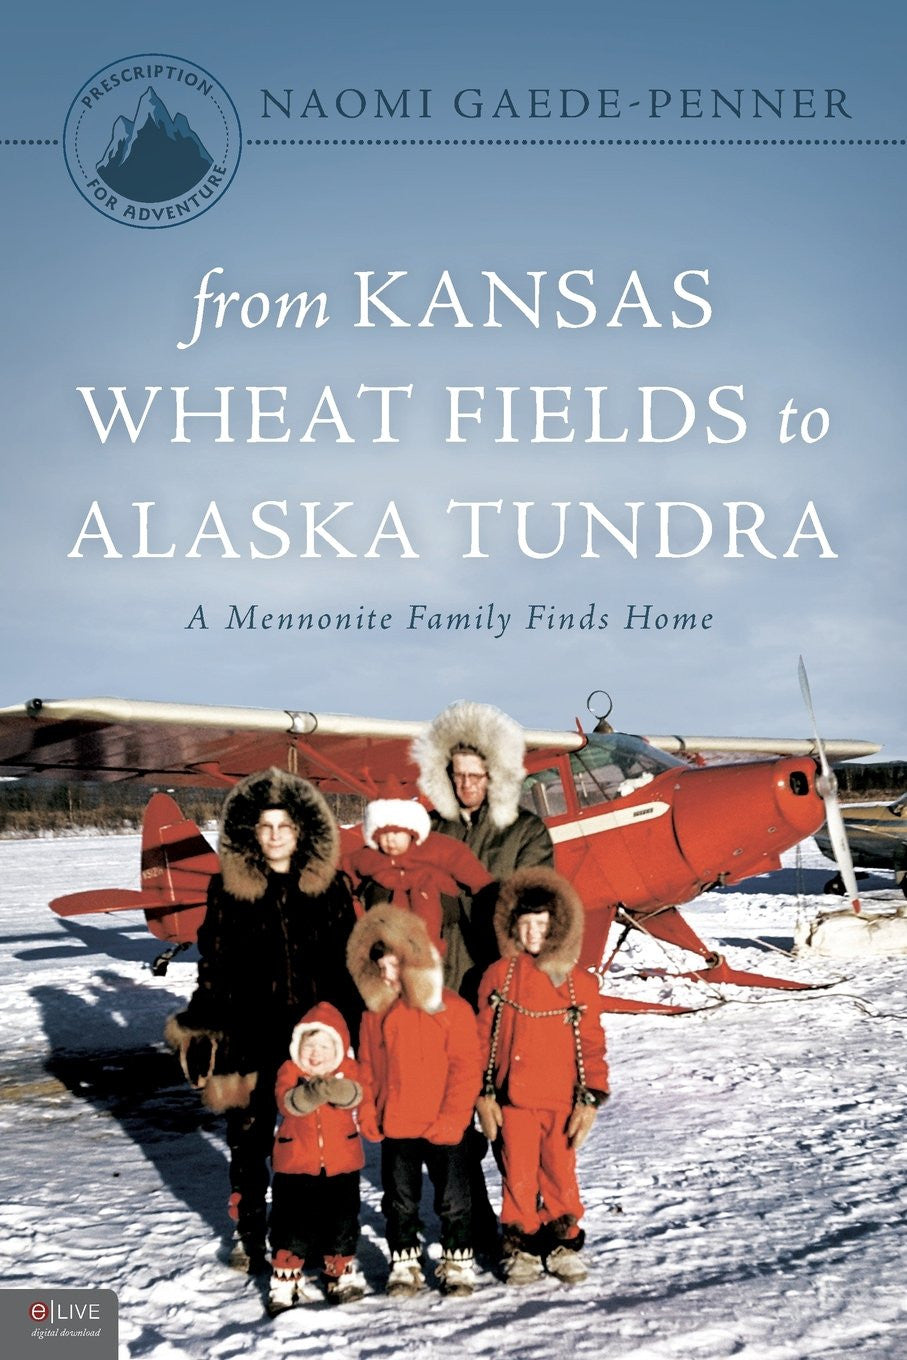 From Kansas Wheat Fields to Alaska Tundra by Naomi Gaede-Penner